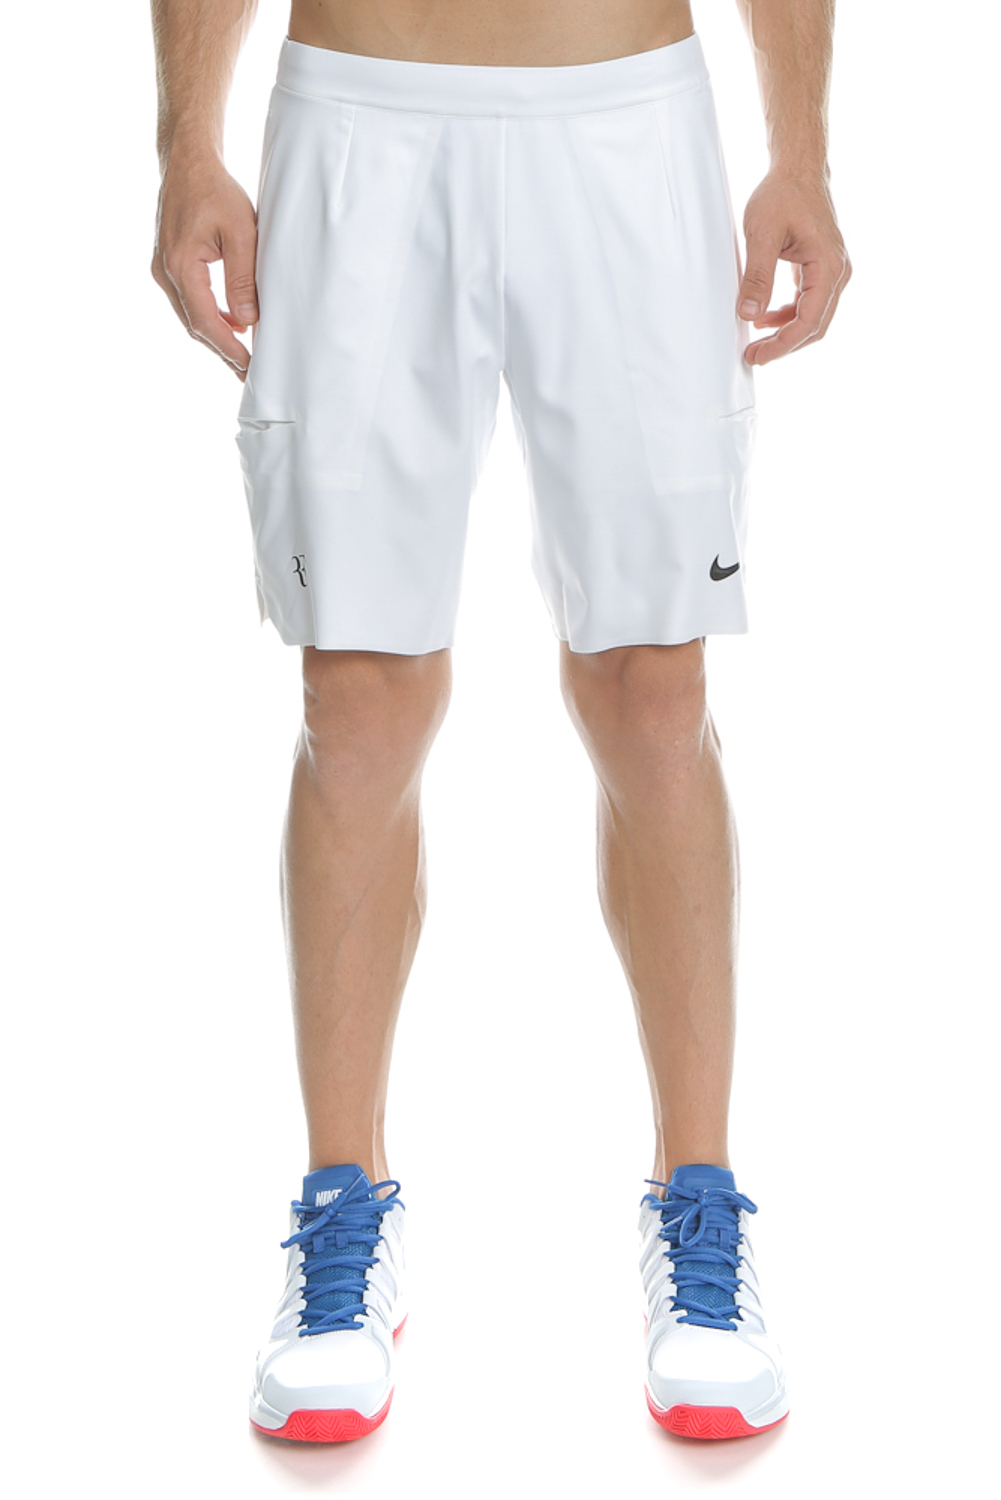 NIKE - Ανδρικό σορτς τένις Nike KCT FLX ACE λευκό